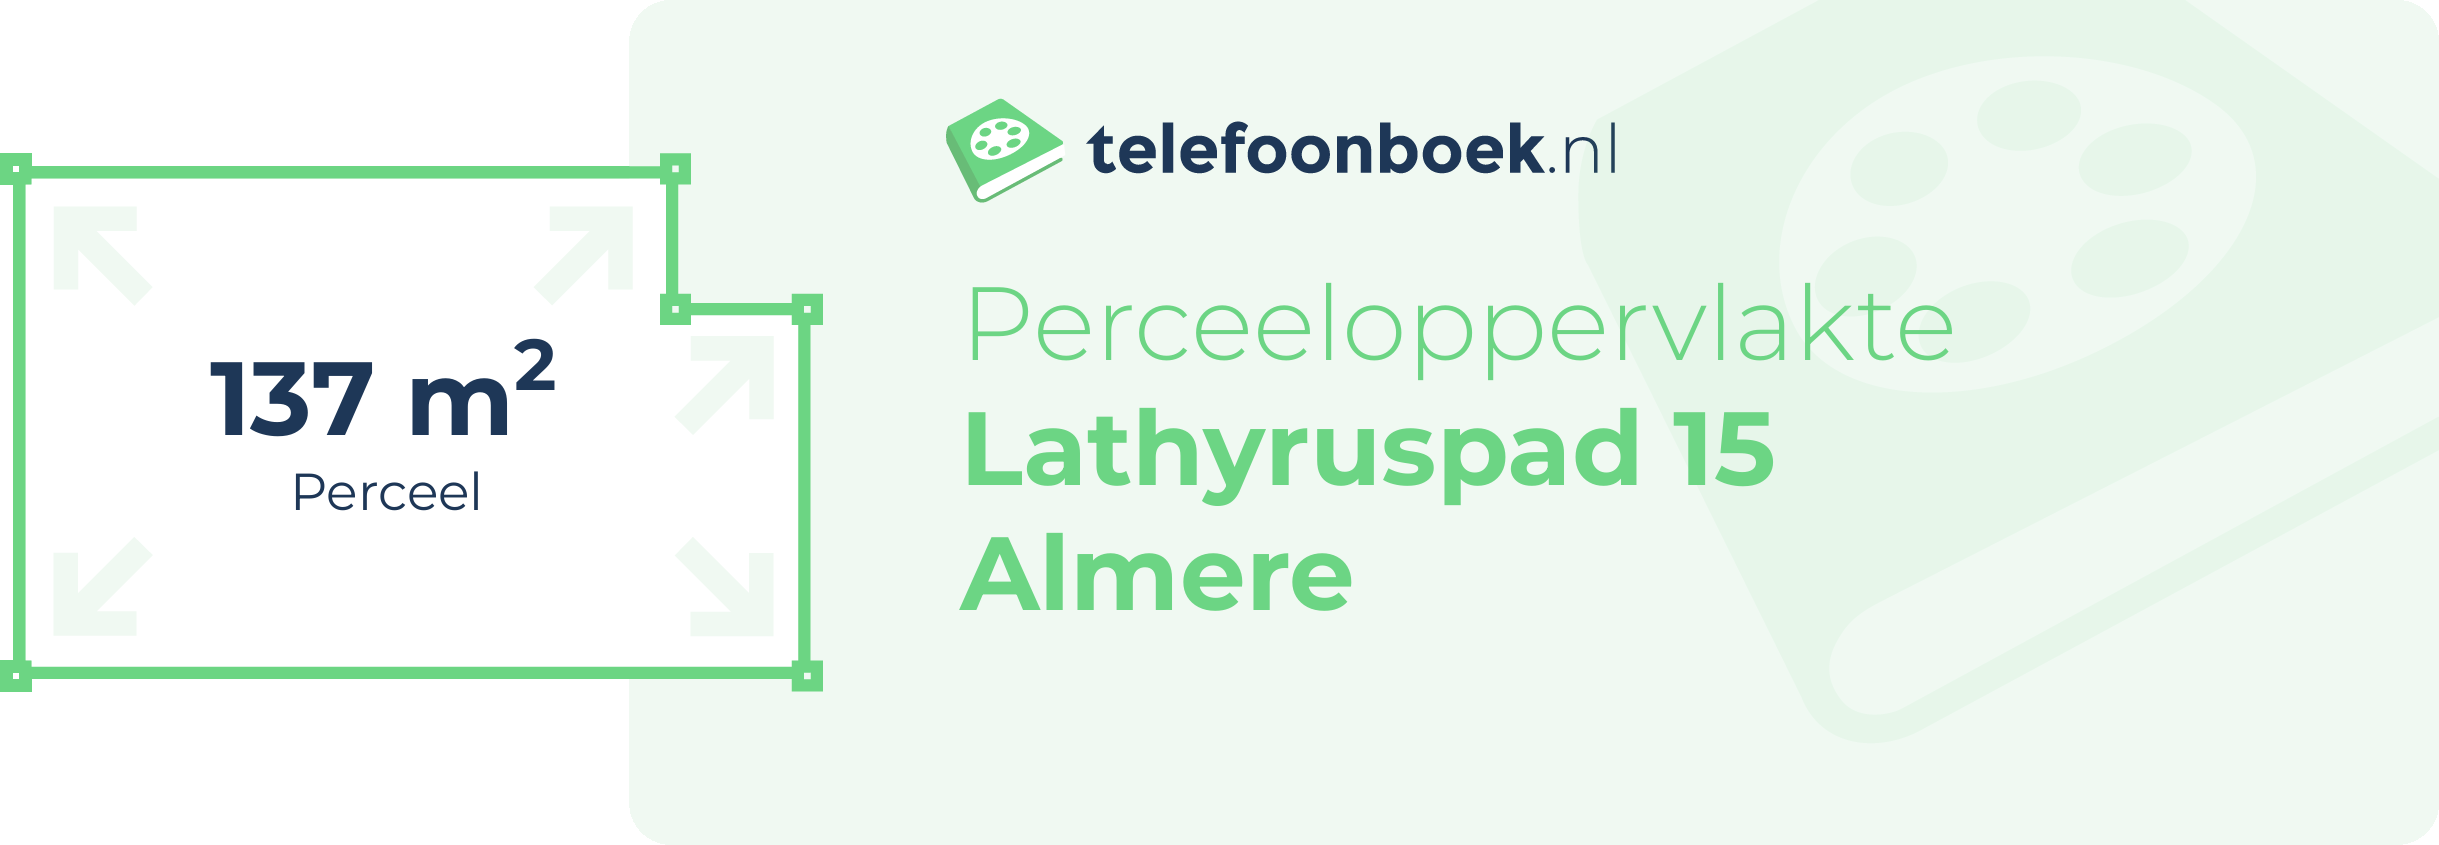 Perceeloppervlakte Lathyruspad 15 Almere